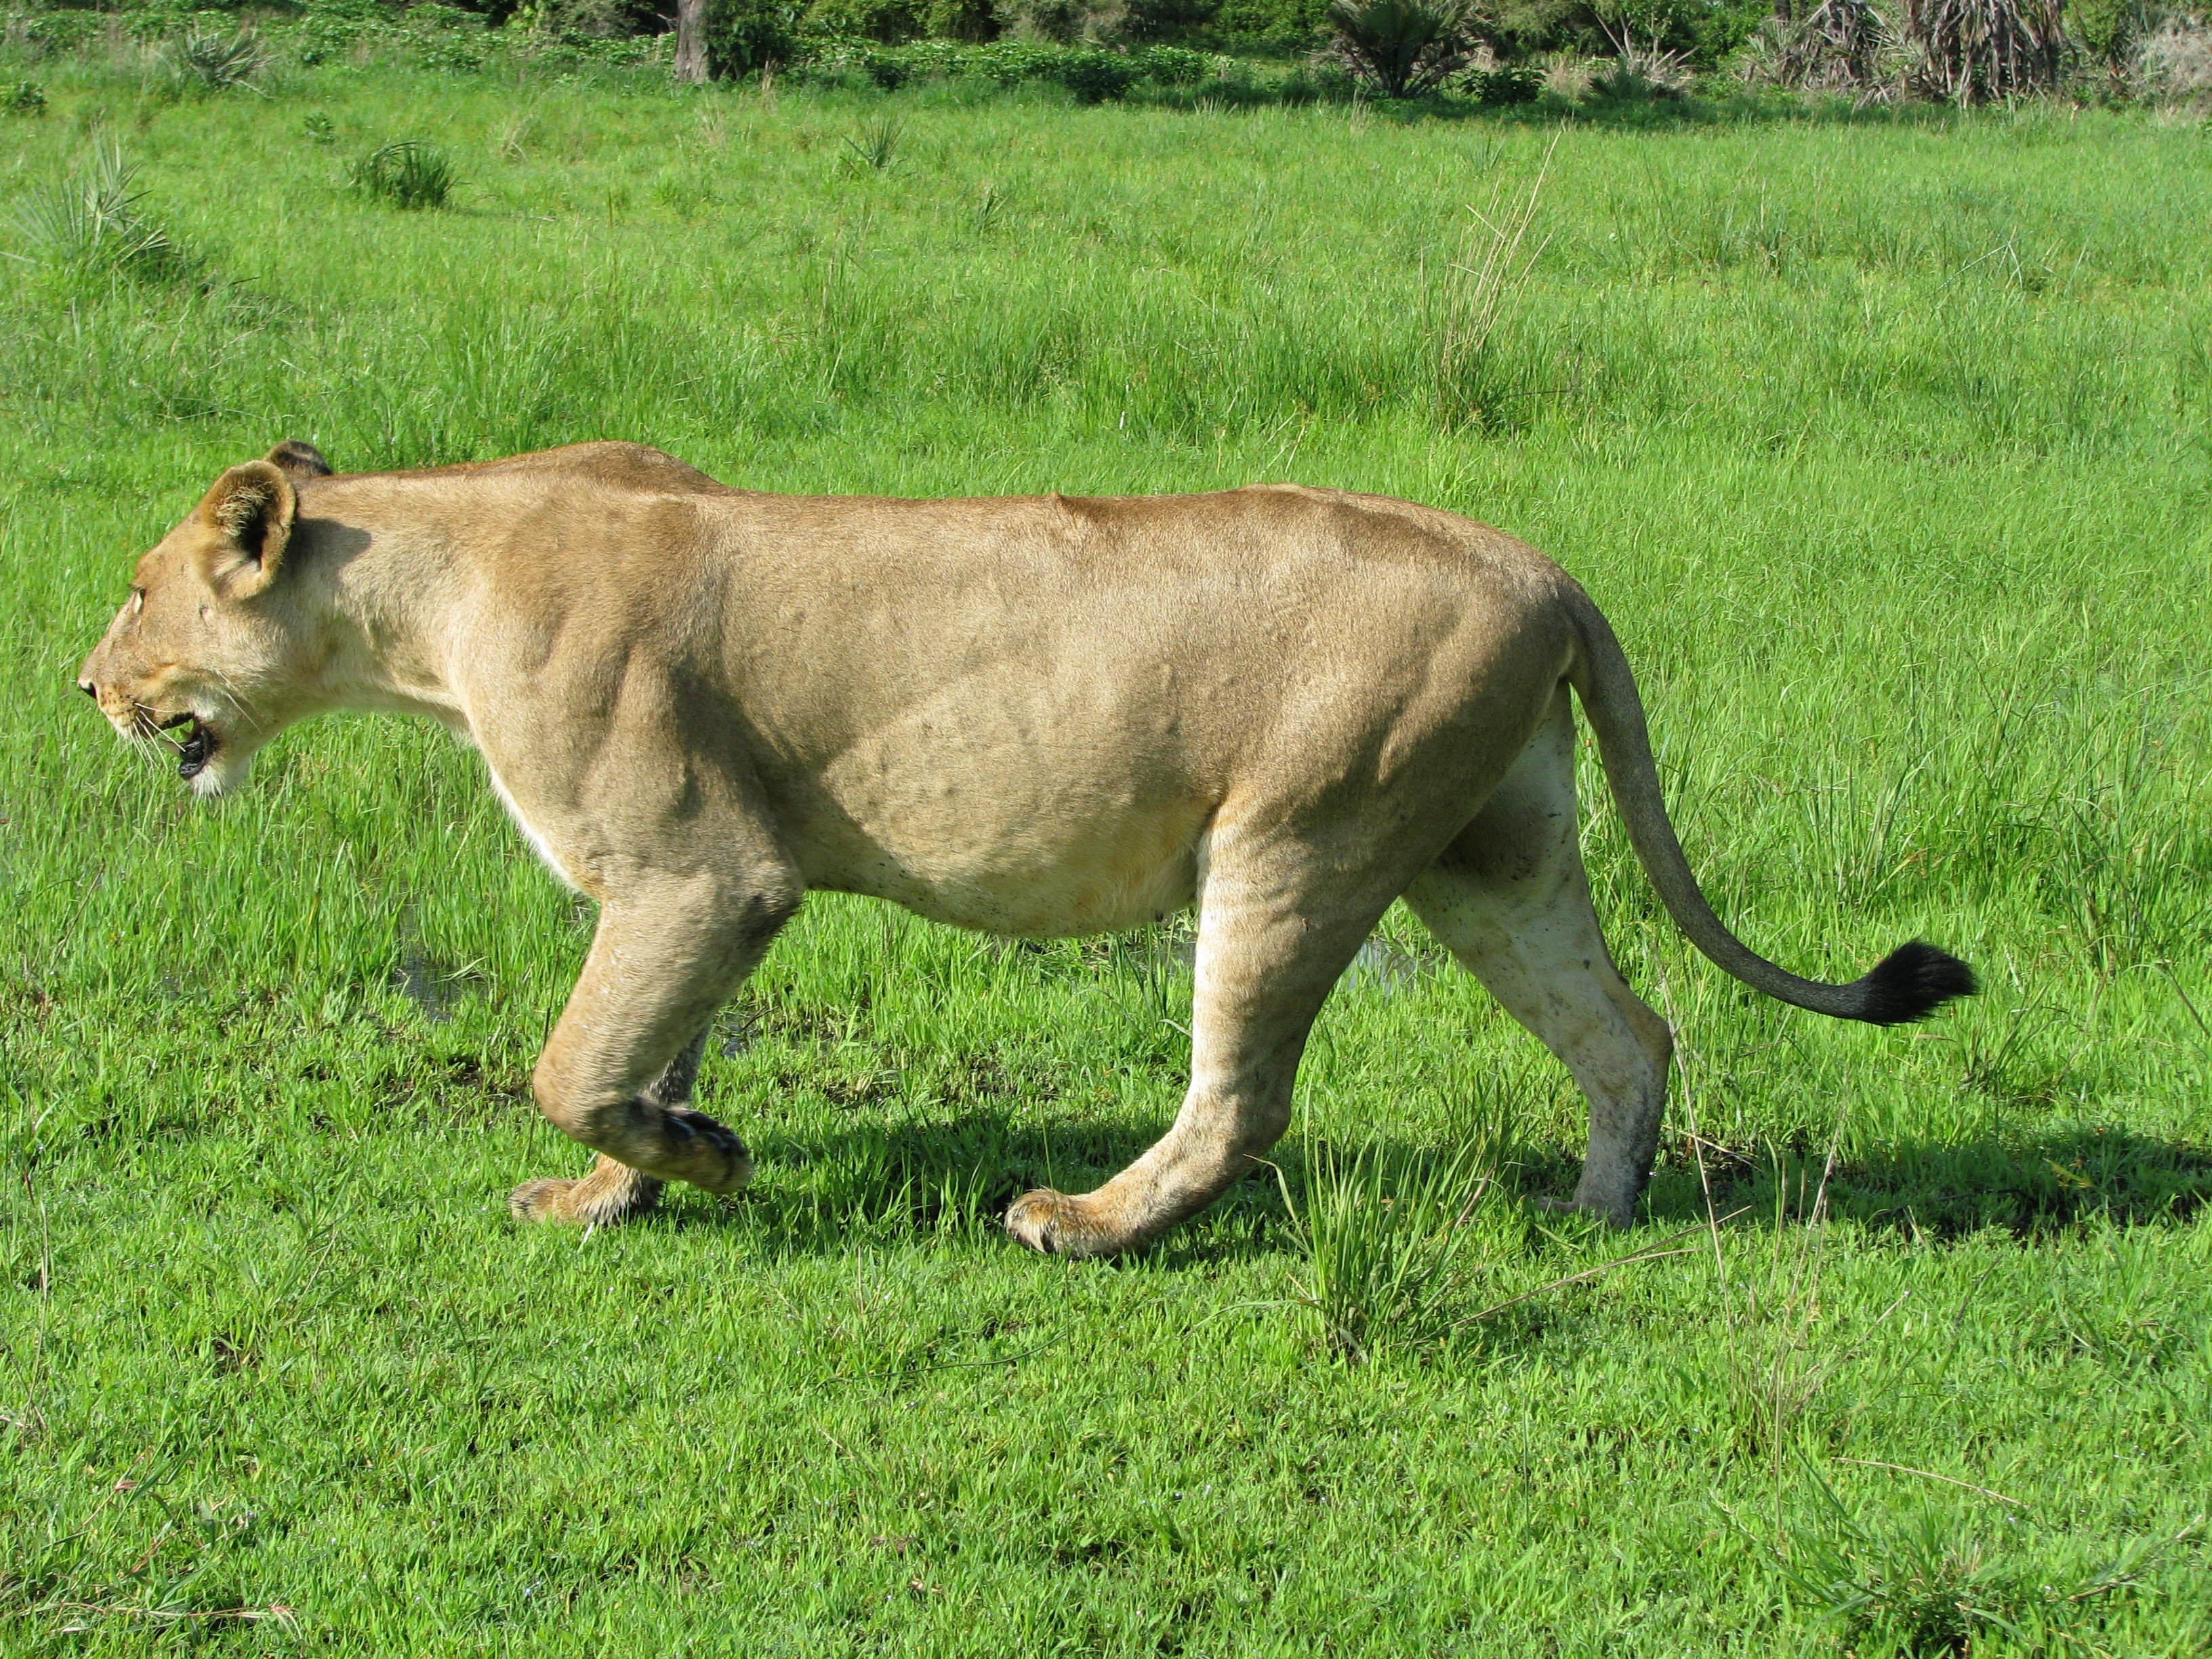 brown lioness